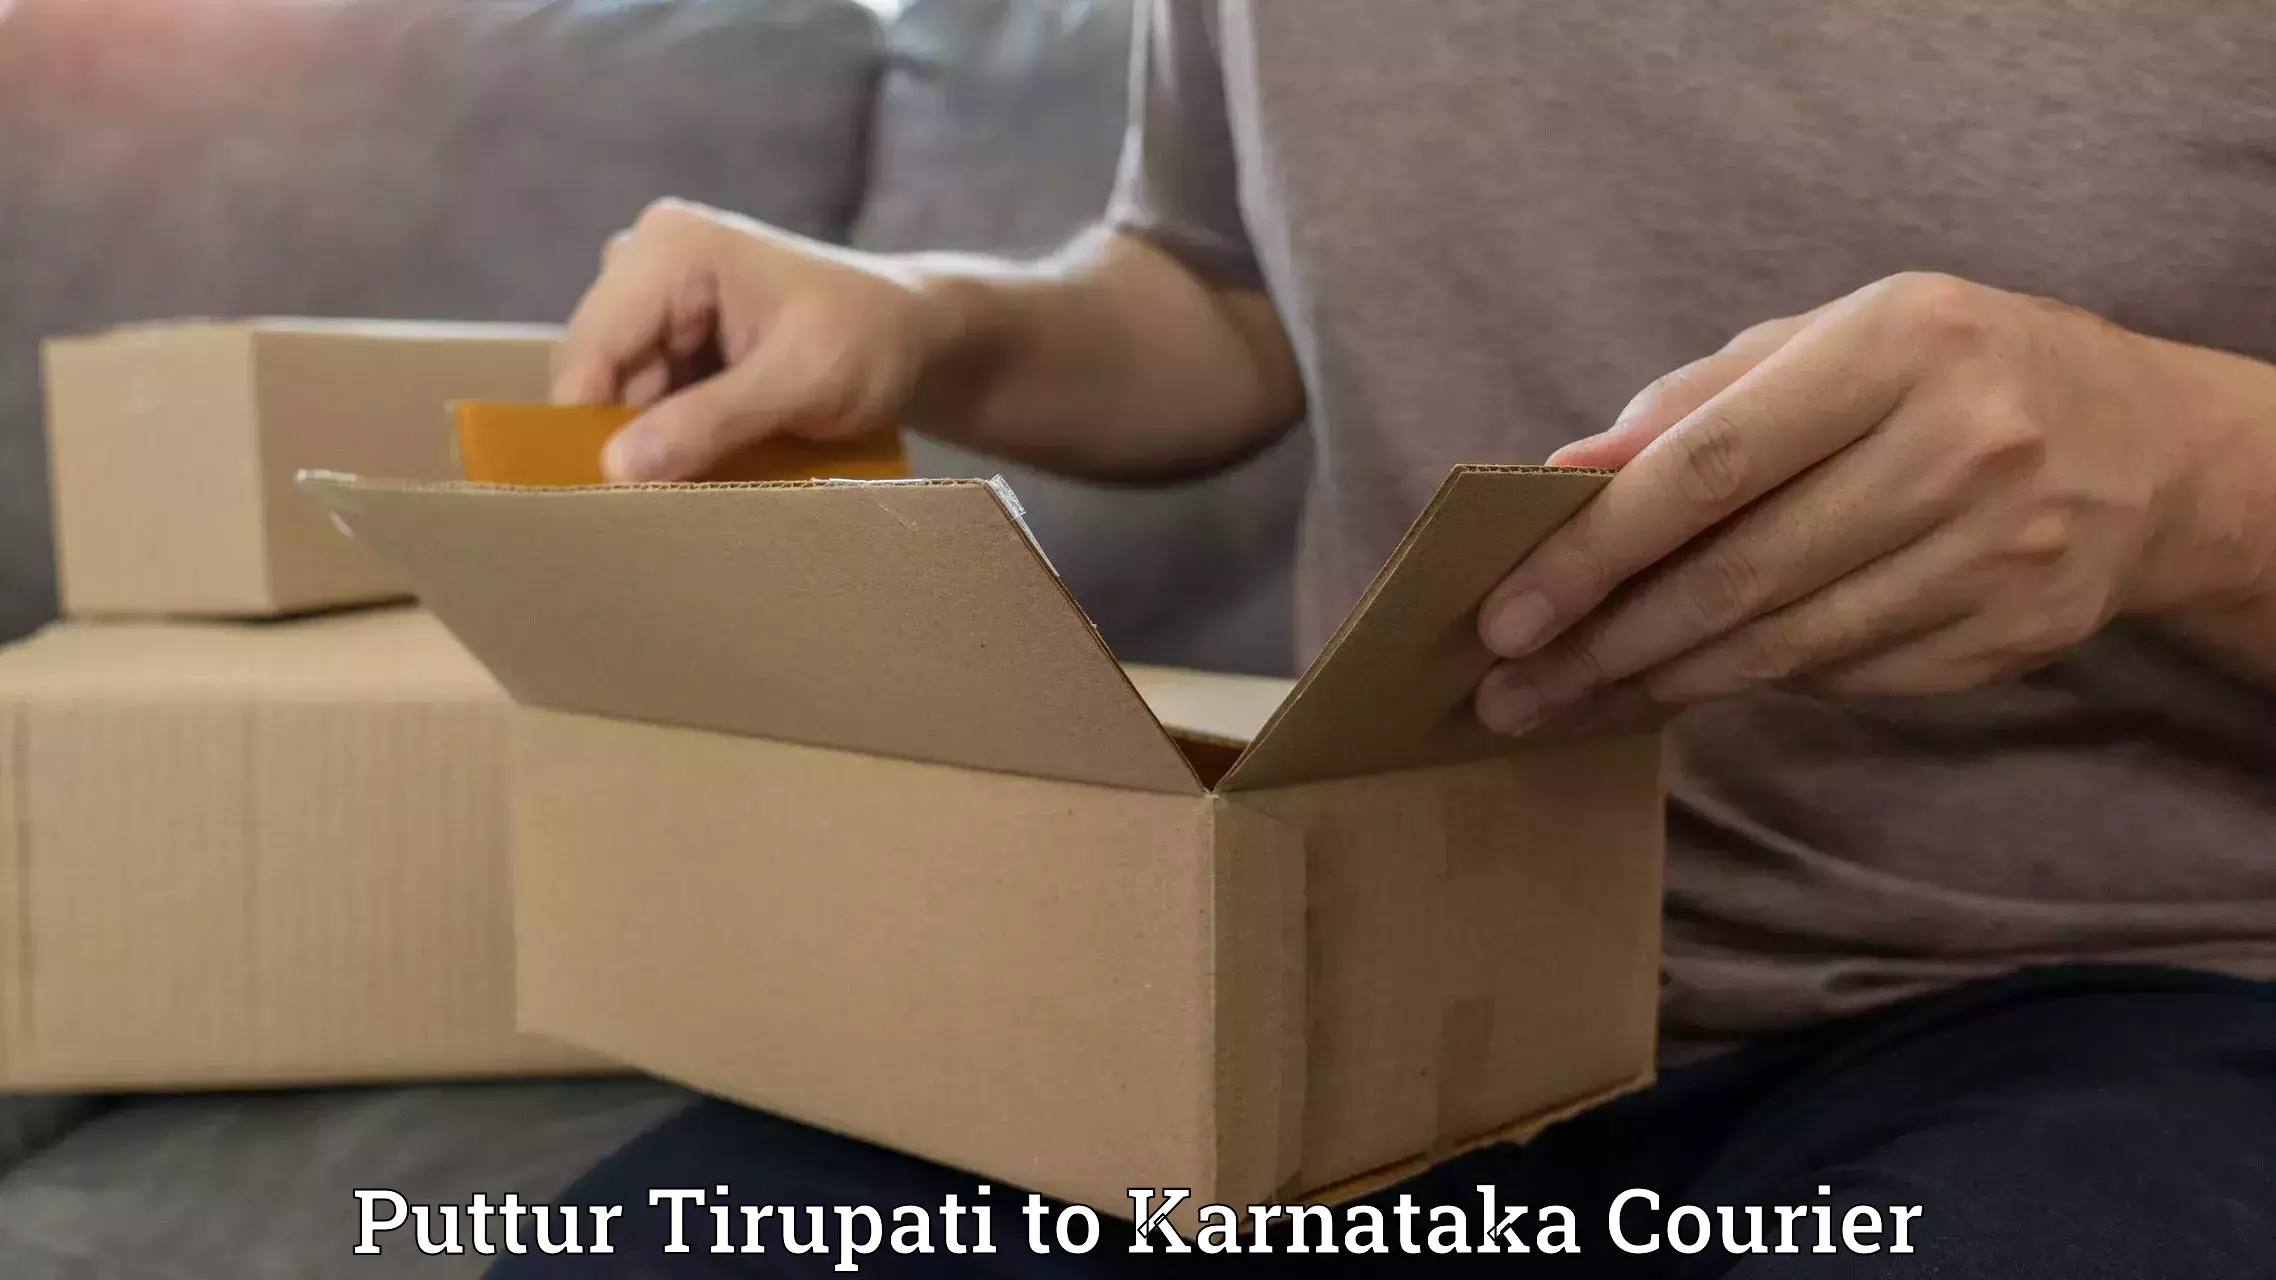 Doorstep delivery service Puttur Tirupati to Karwar